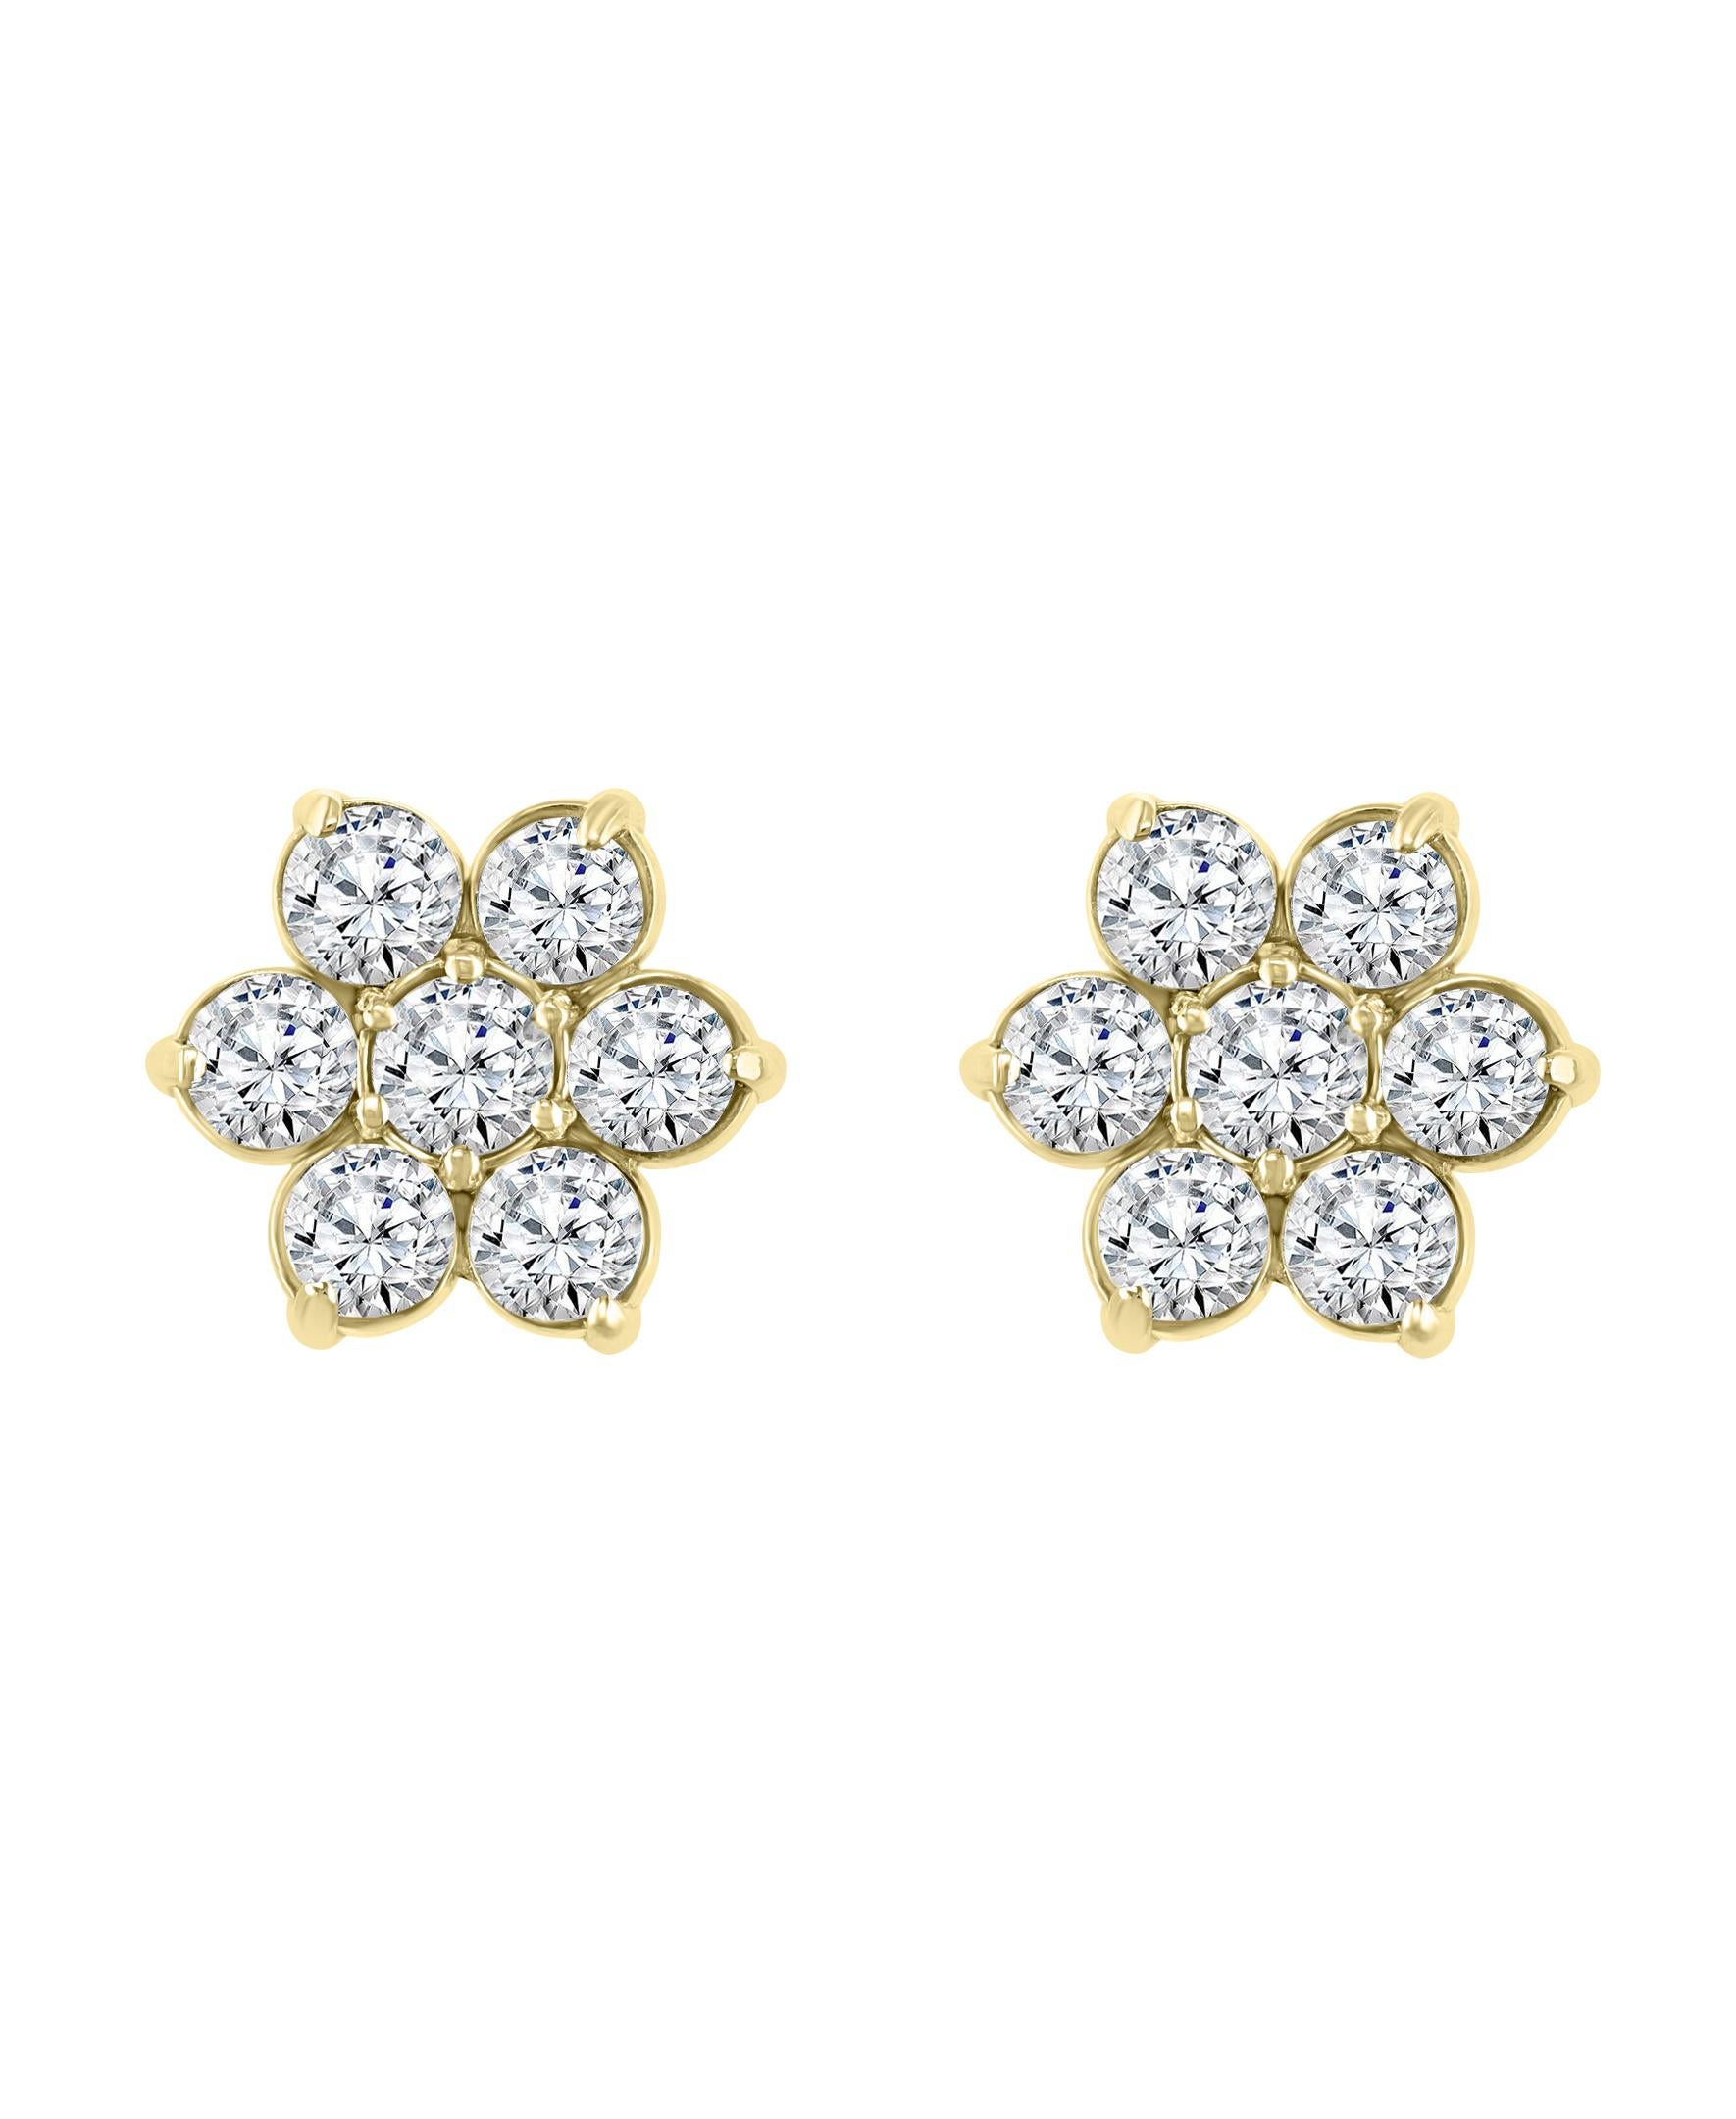 Troika diamond earrings | G.Rajam Chetty And Sons Jewellers